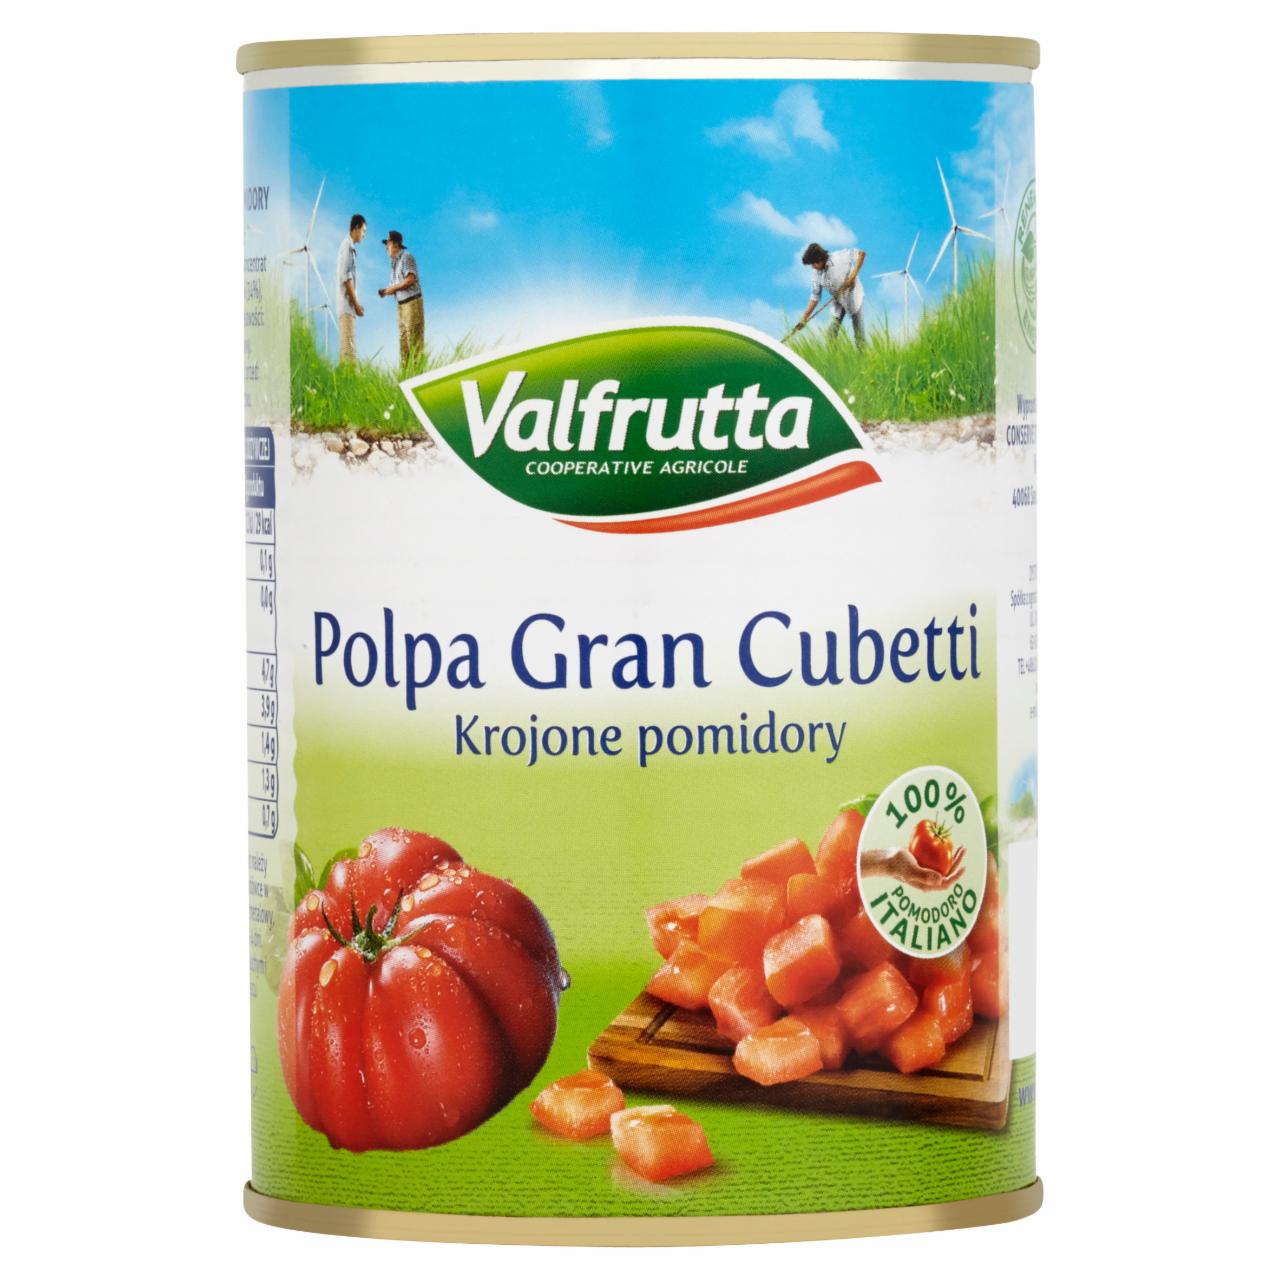 Zdjęcia - Valfrutta Krojone pomidory 400 g